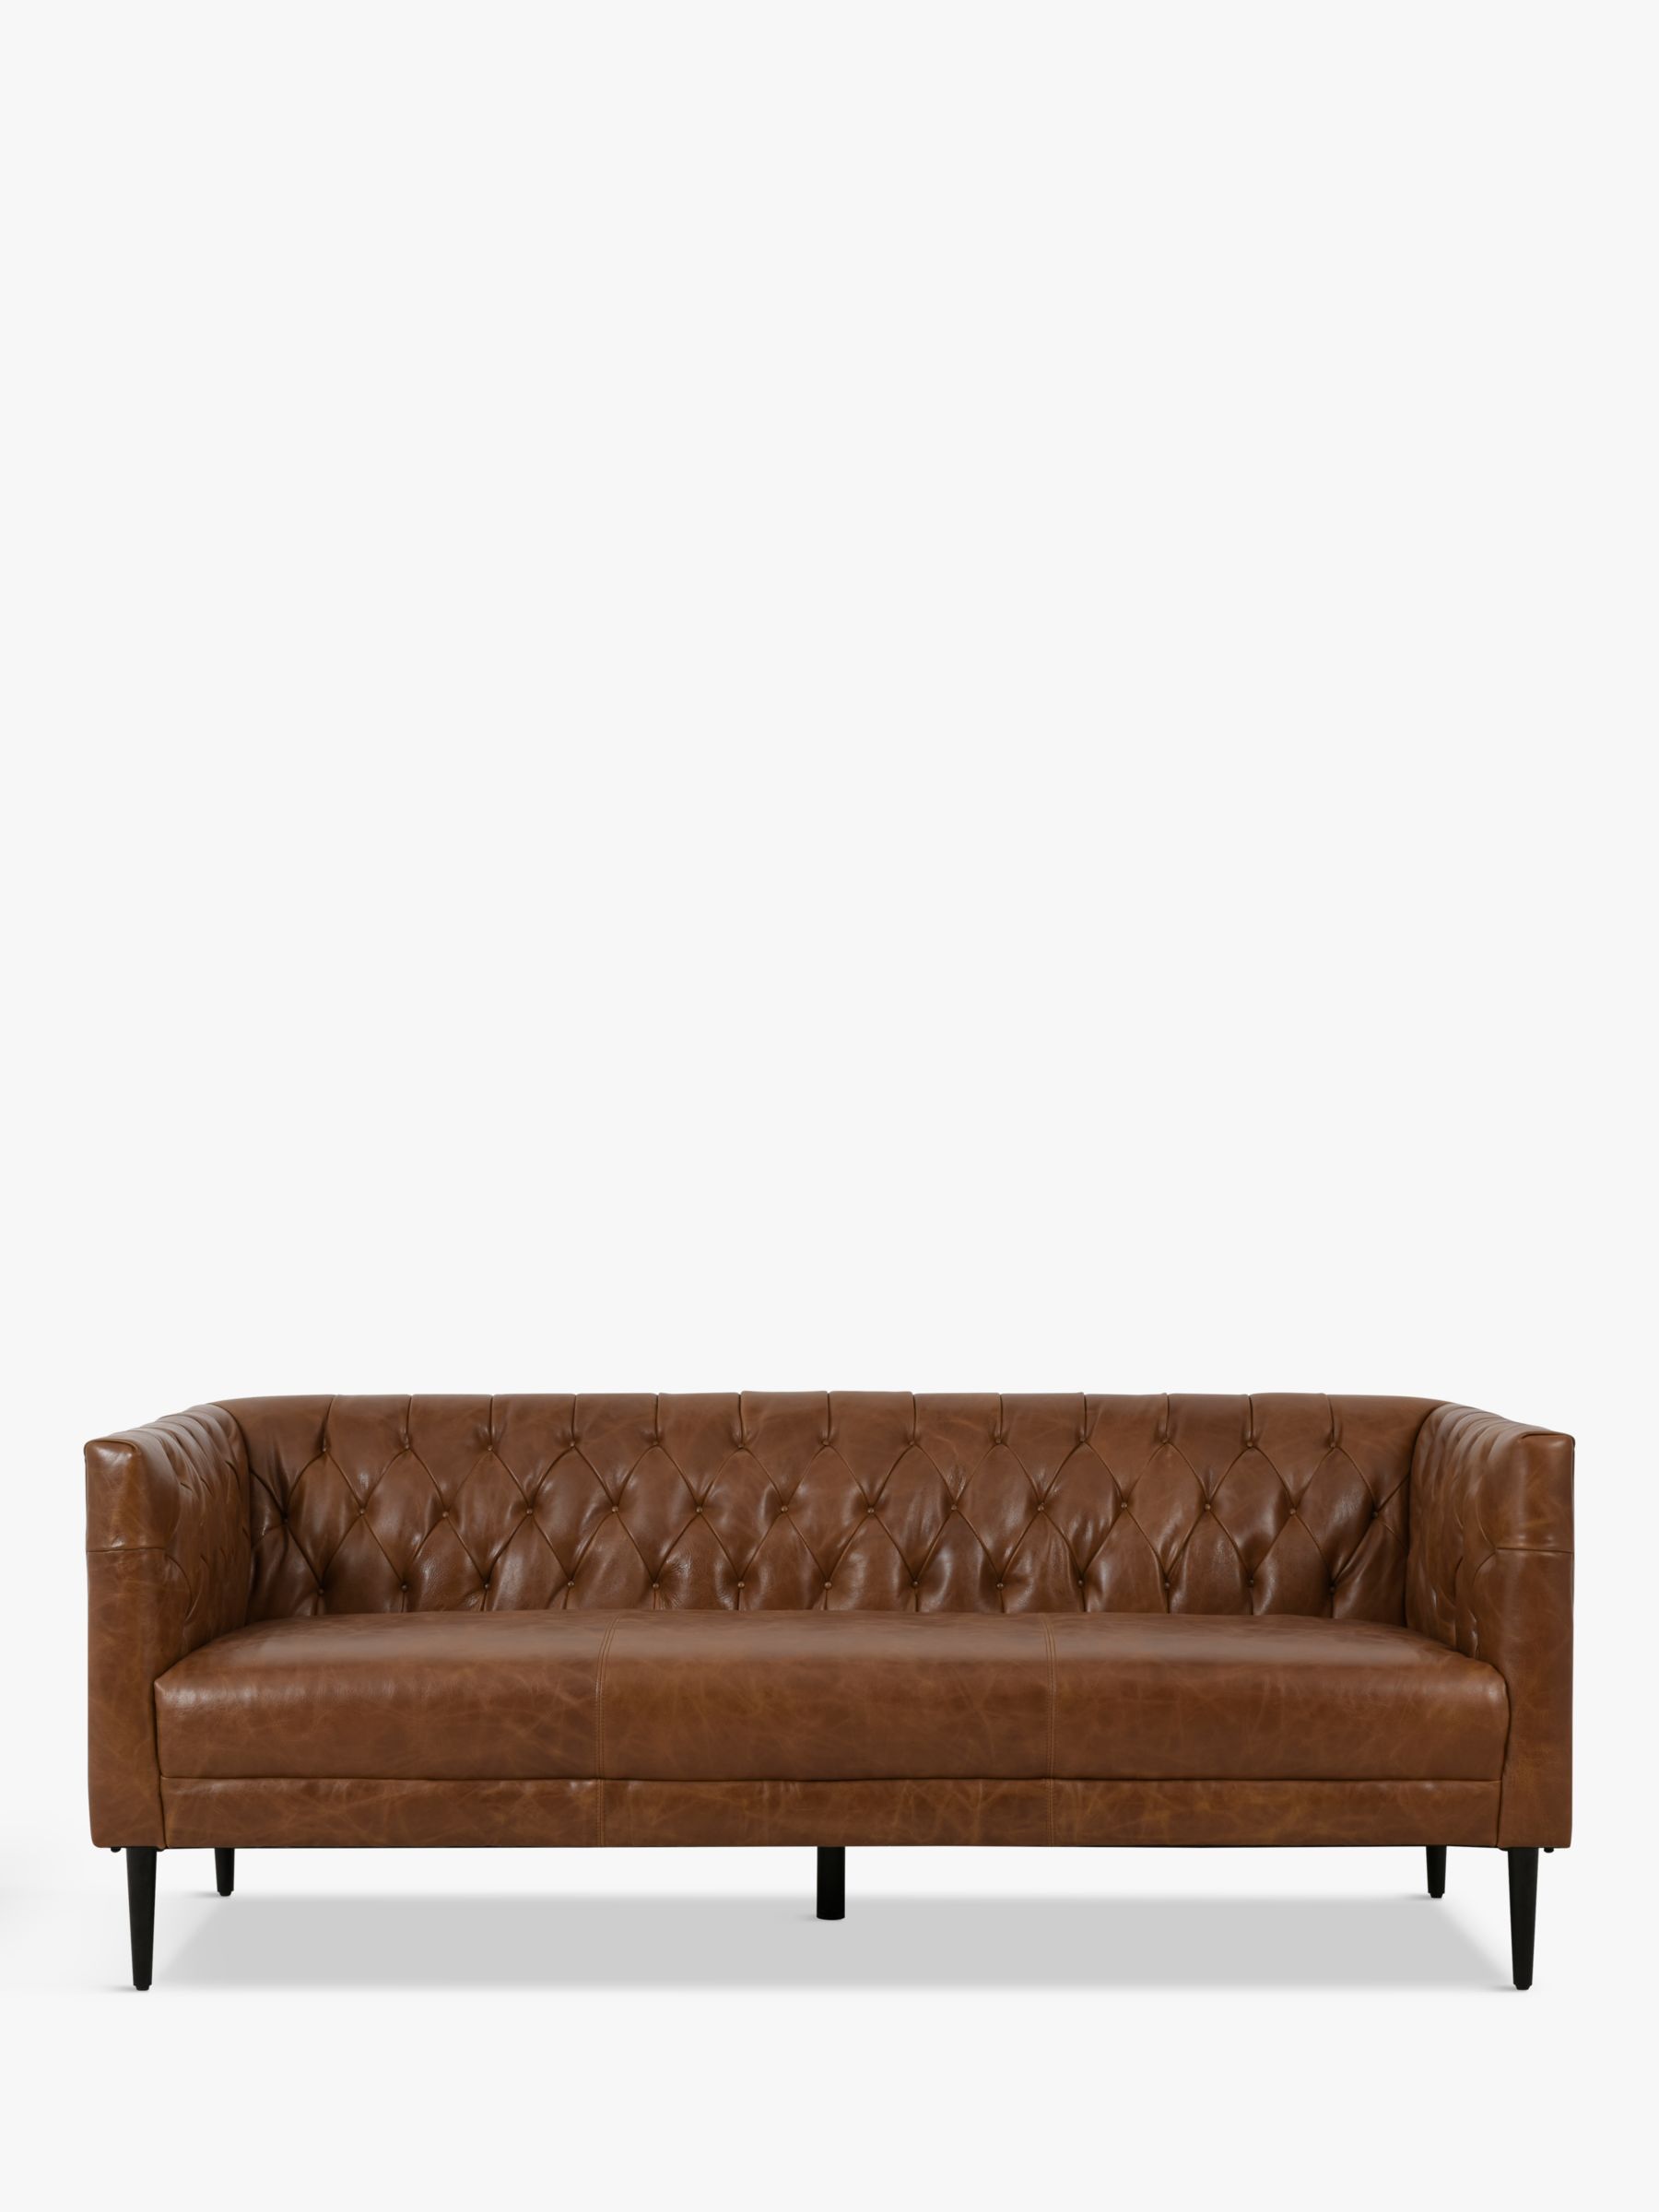 Photo of Halo williams large 3 seater leather sofa vintage soft camel